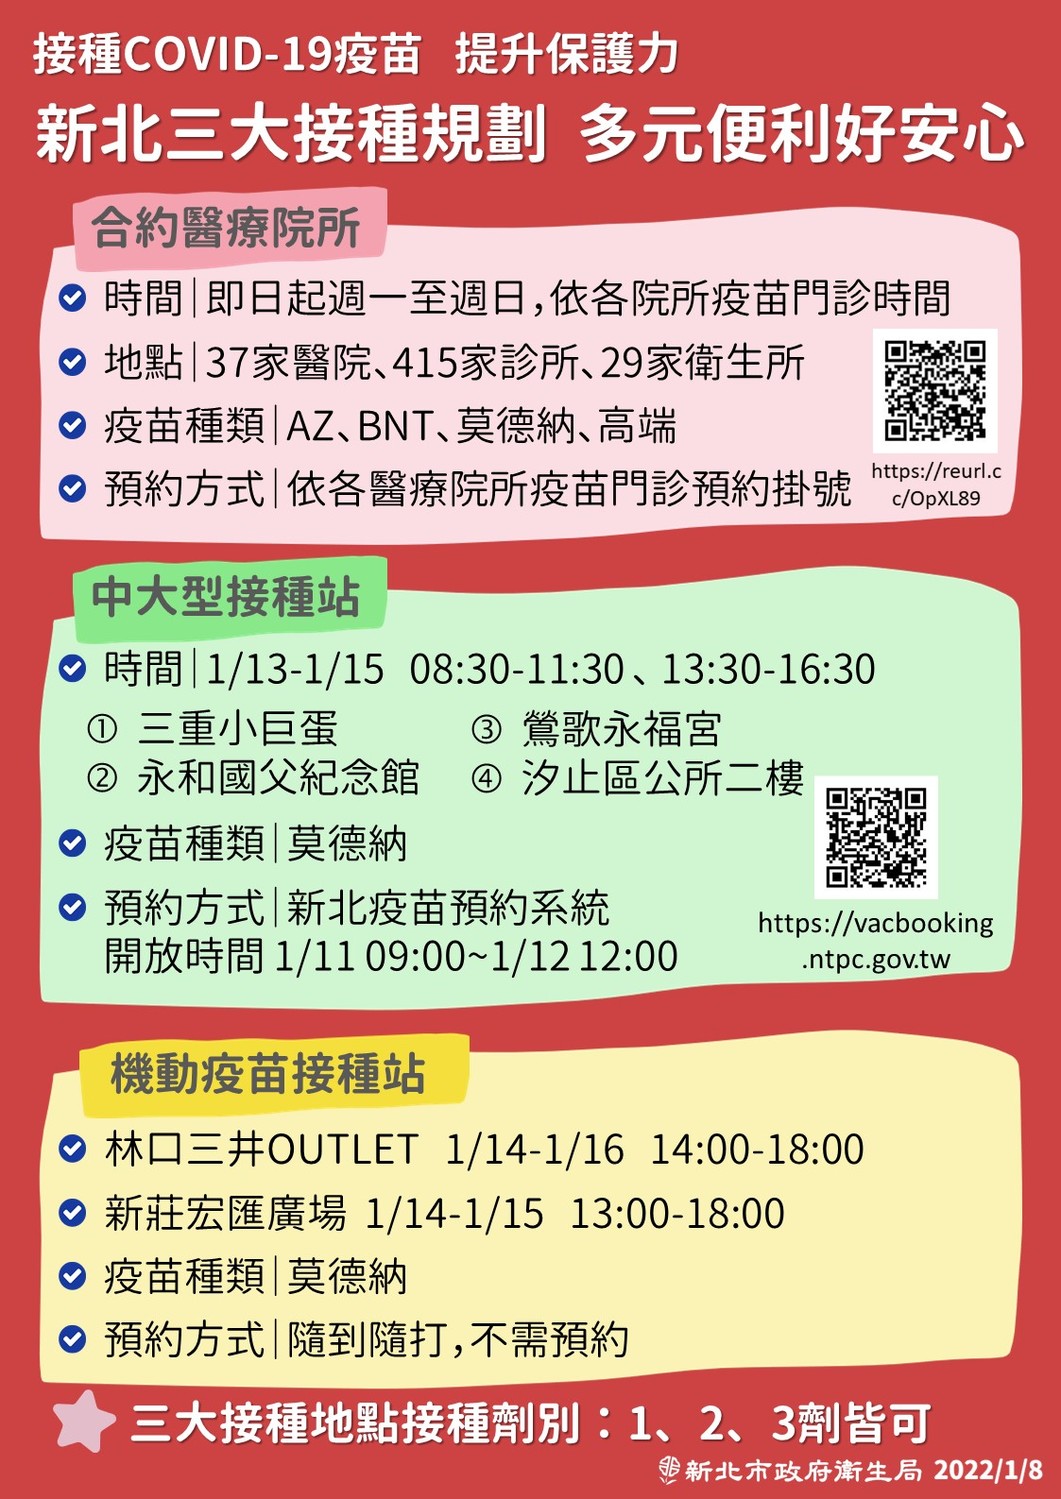 COVID-19 Vaccination Program of New Taipei City. (Photo / Provided by New Taipei City Government)